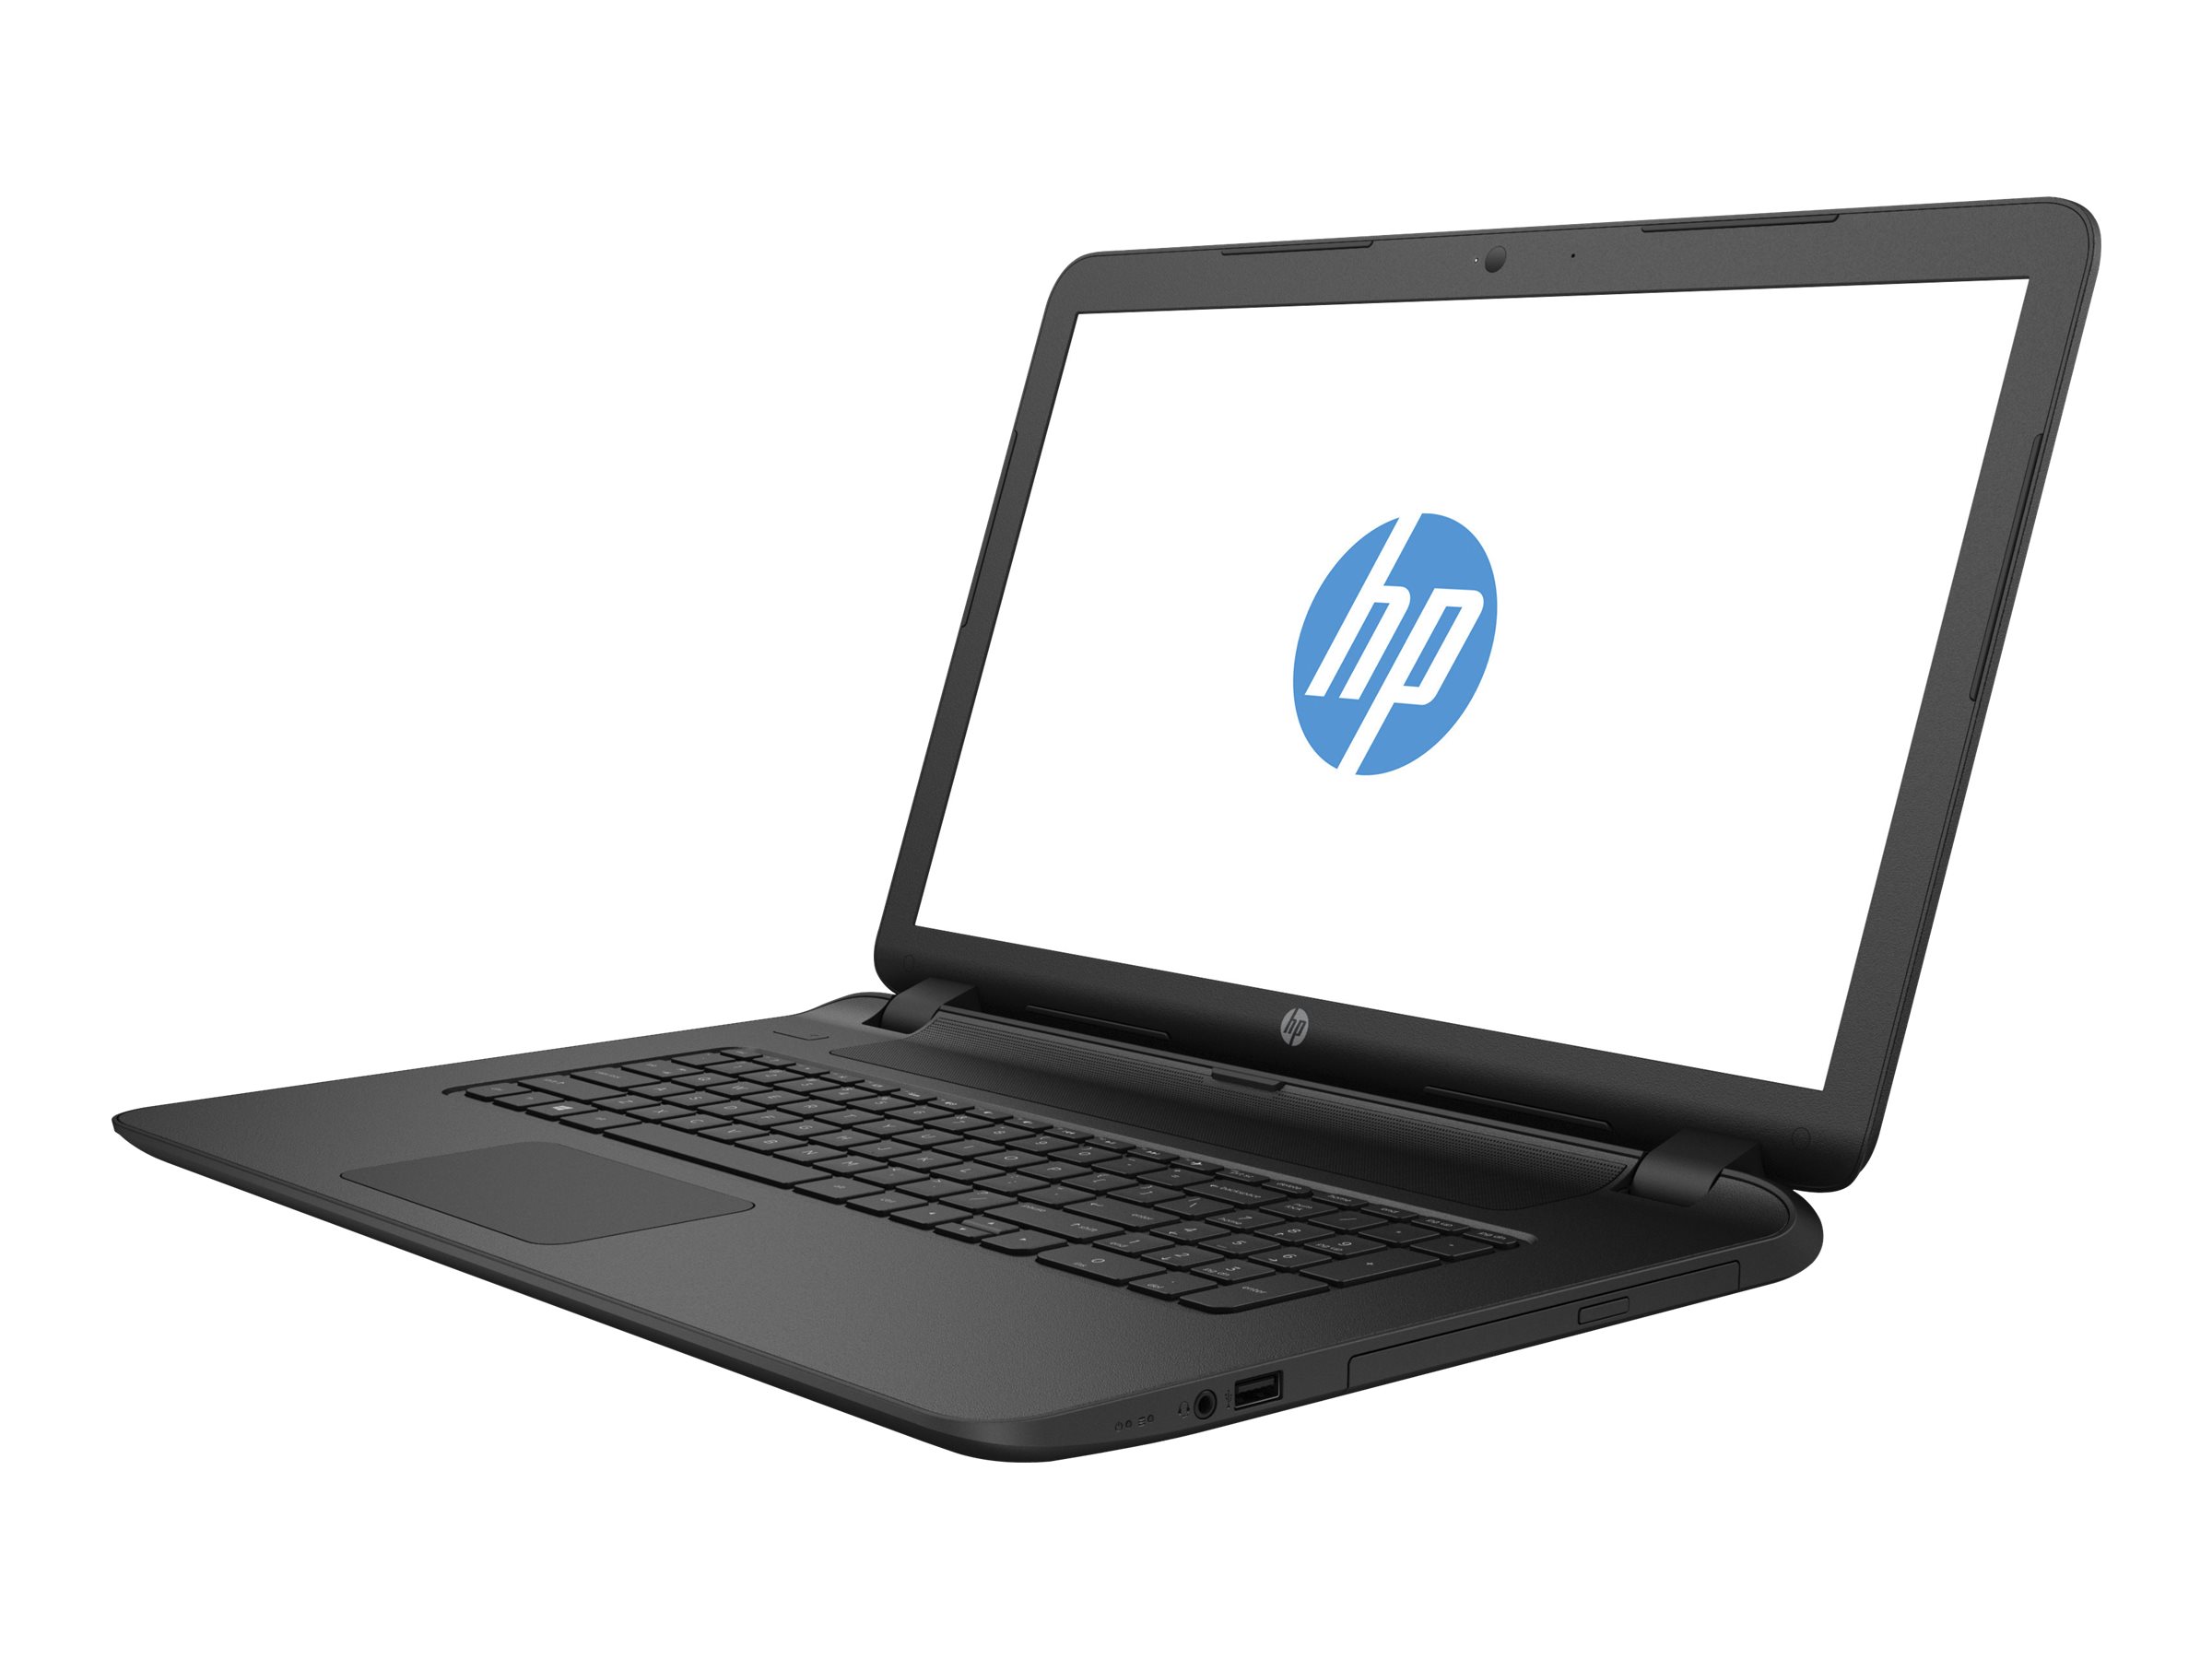 HP Laptop 17-p121wm - AMD A6 - 6310 / up to 2.4 GHz - Win 10 Home 64-bit - Radeon R4 - 4 GB RAM - 500 GB HDD - DVD SuperMulti - 17.3" 1600 x 900 (HD+) - HP textured linear pattern in black - kbd: US - image 1 of 5